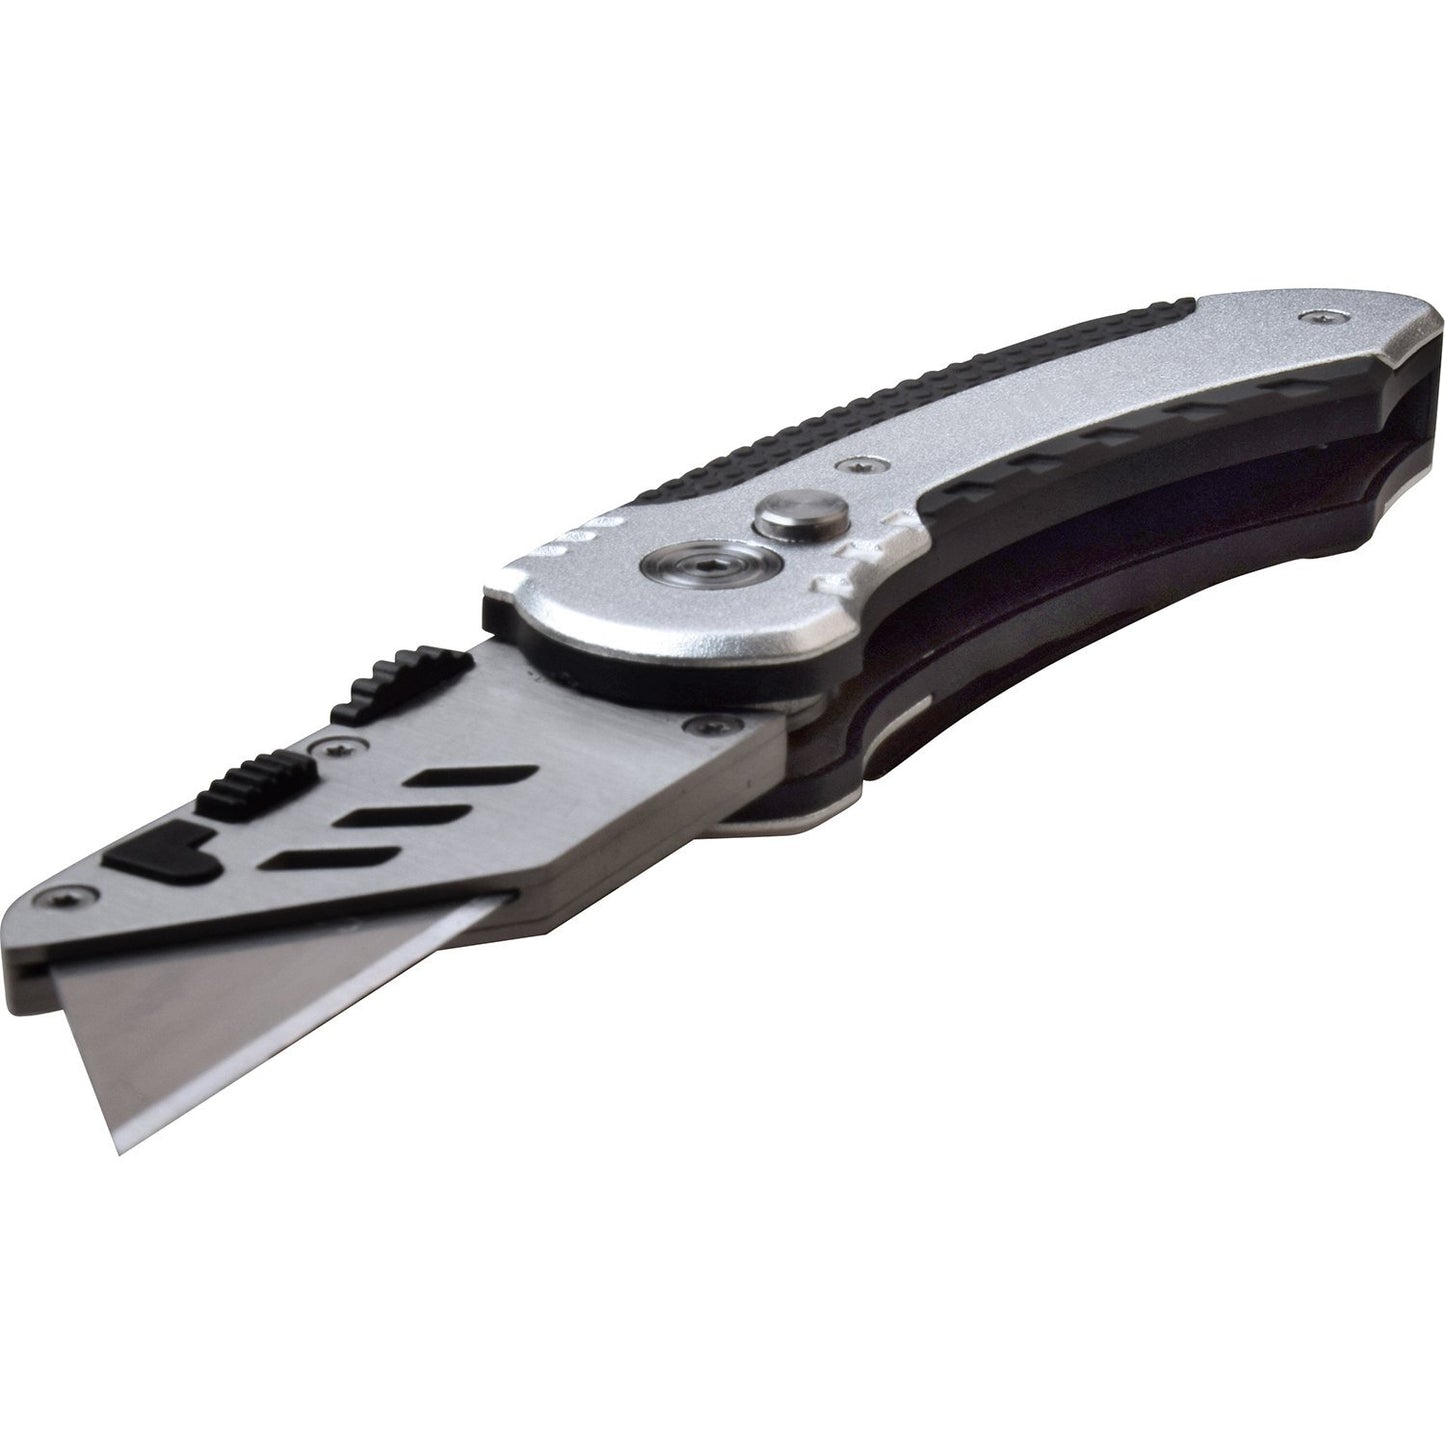 Mtech Mtech 6.25 Inch Utility Blade Button Lock Folding Knife - Silver #mt-Ut001S Gray